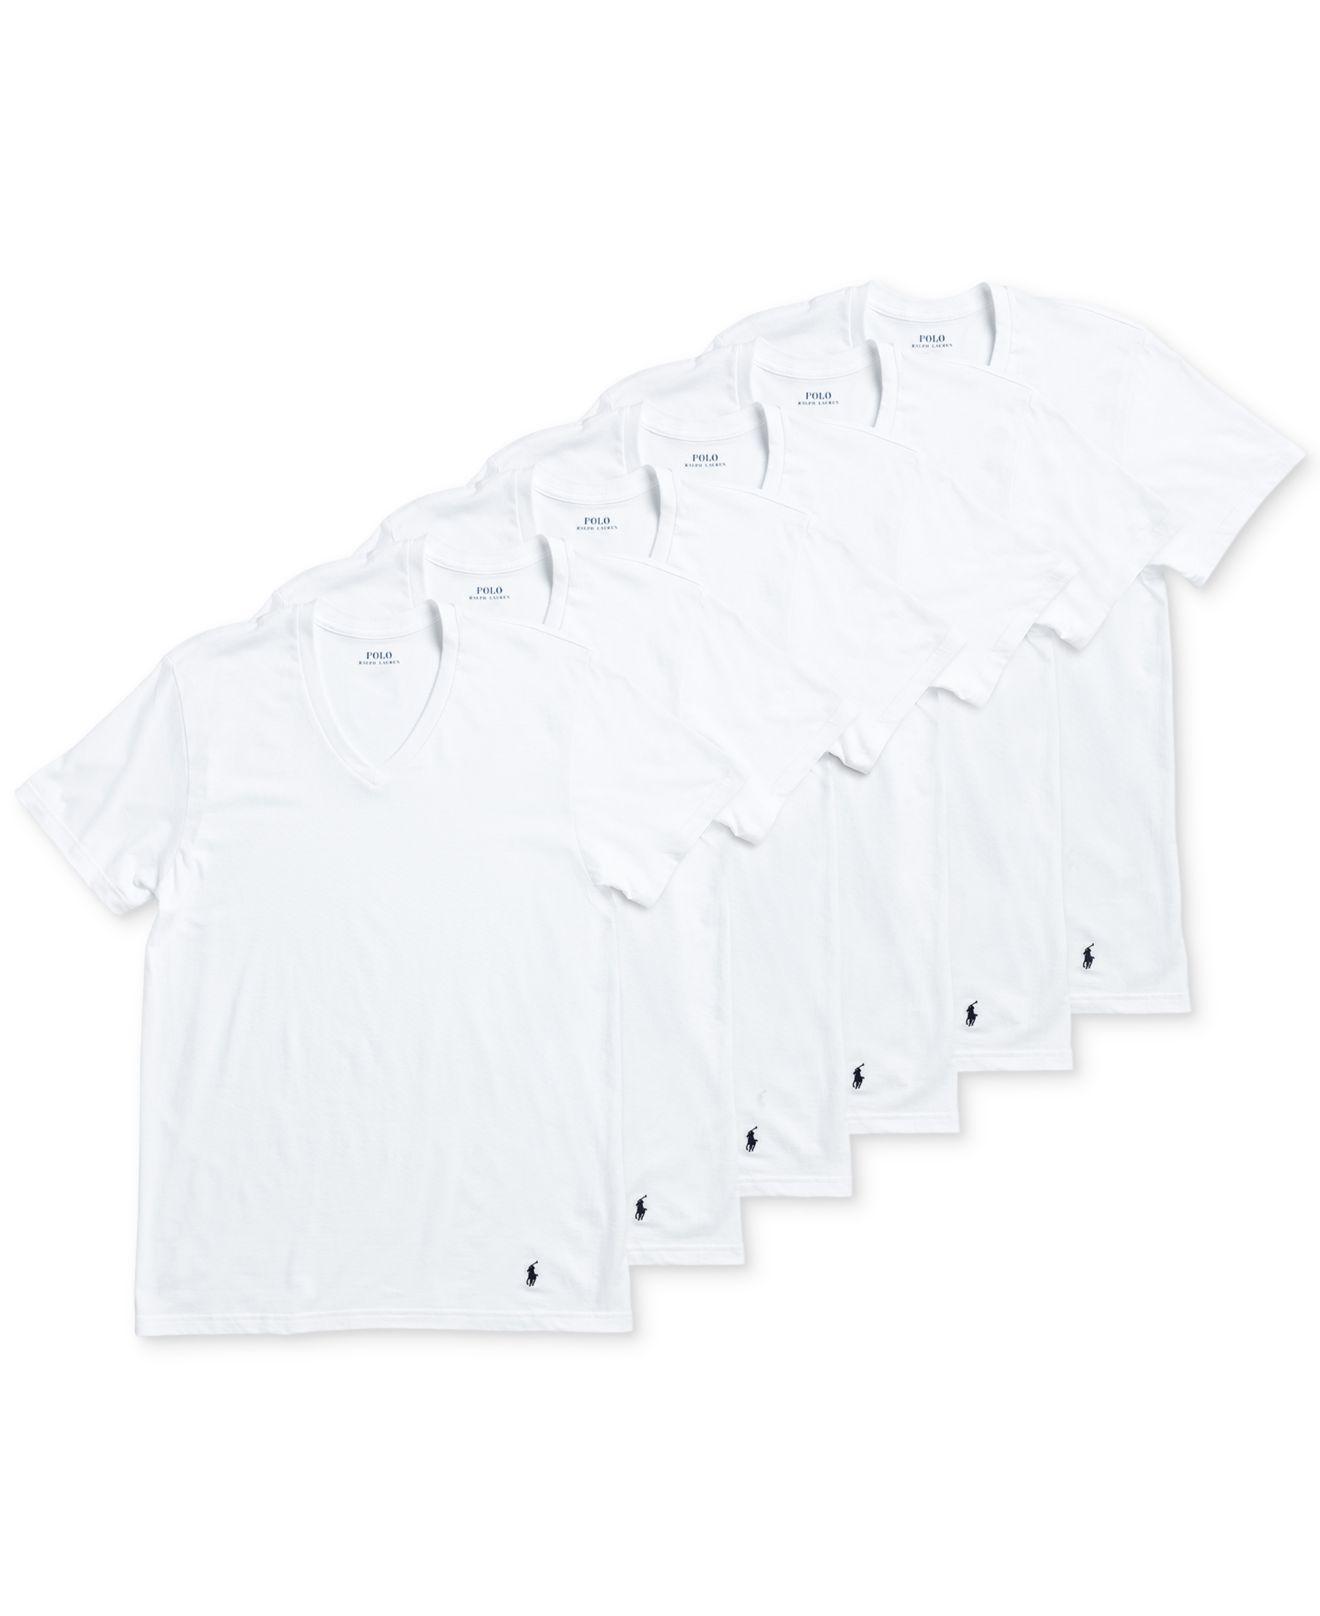 Polo Ralph Lauren Cotton Men?s P5 +1 V-neck Undershirts in White for ...